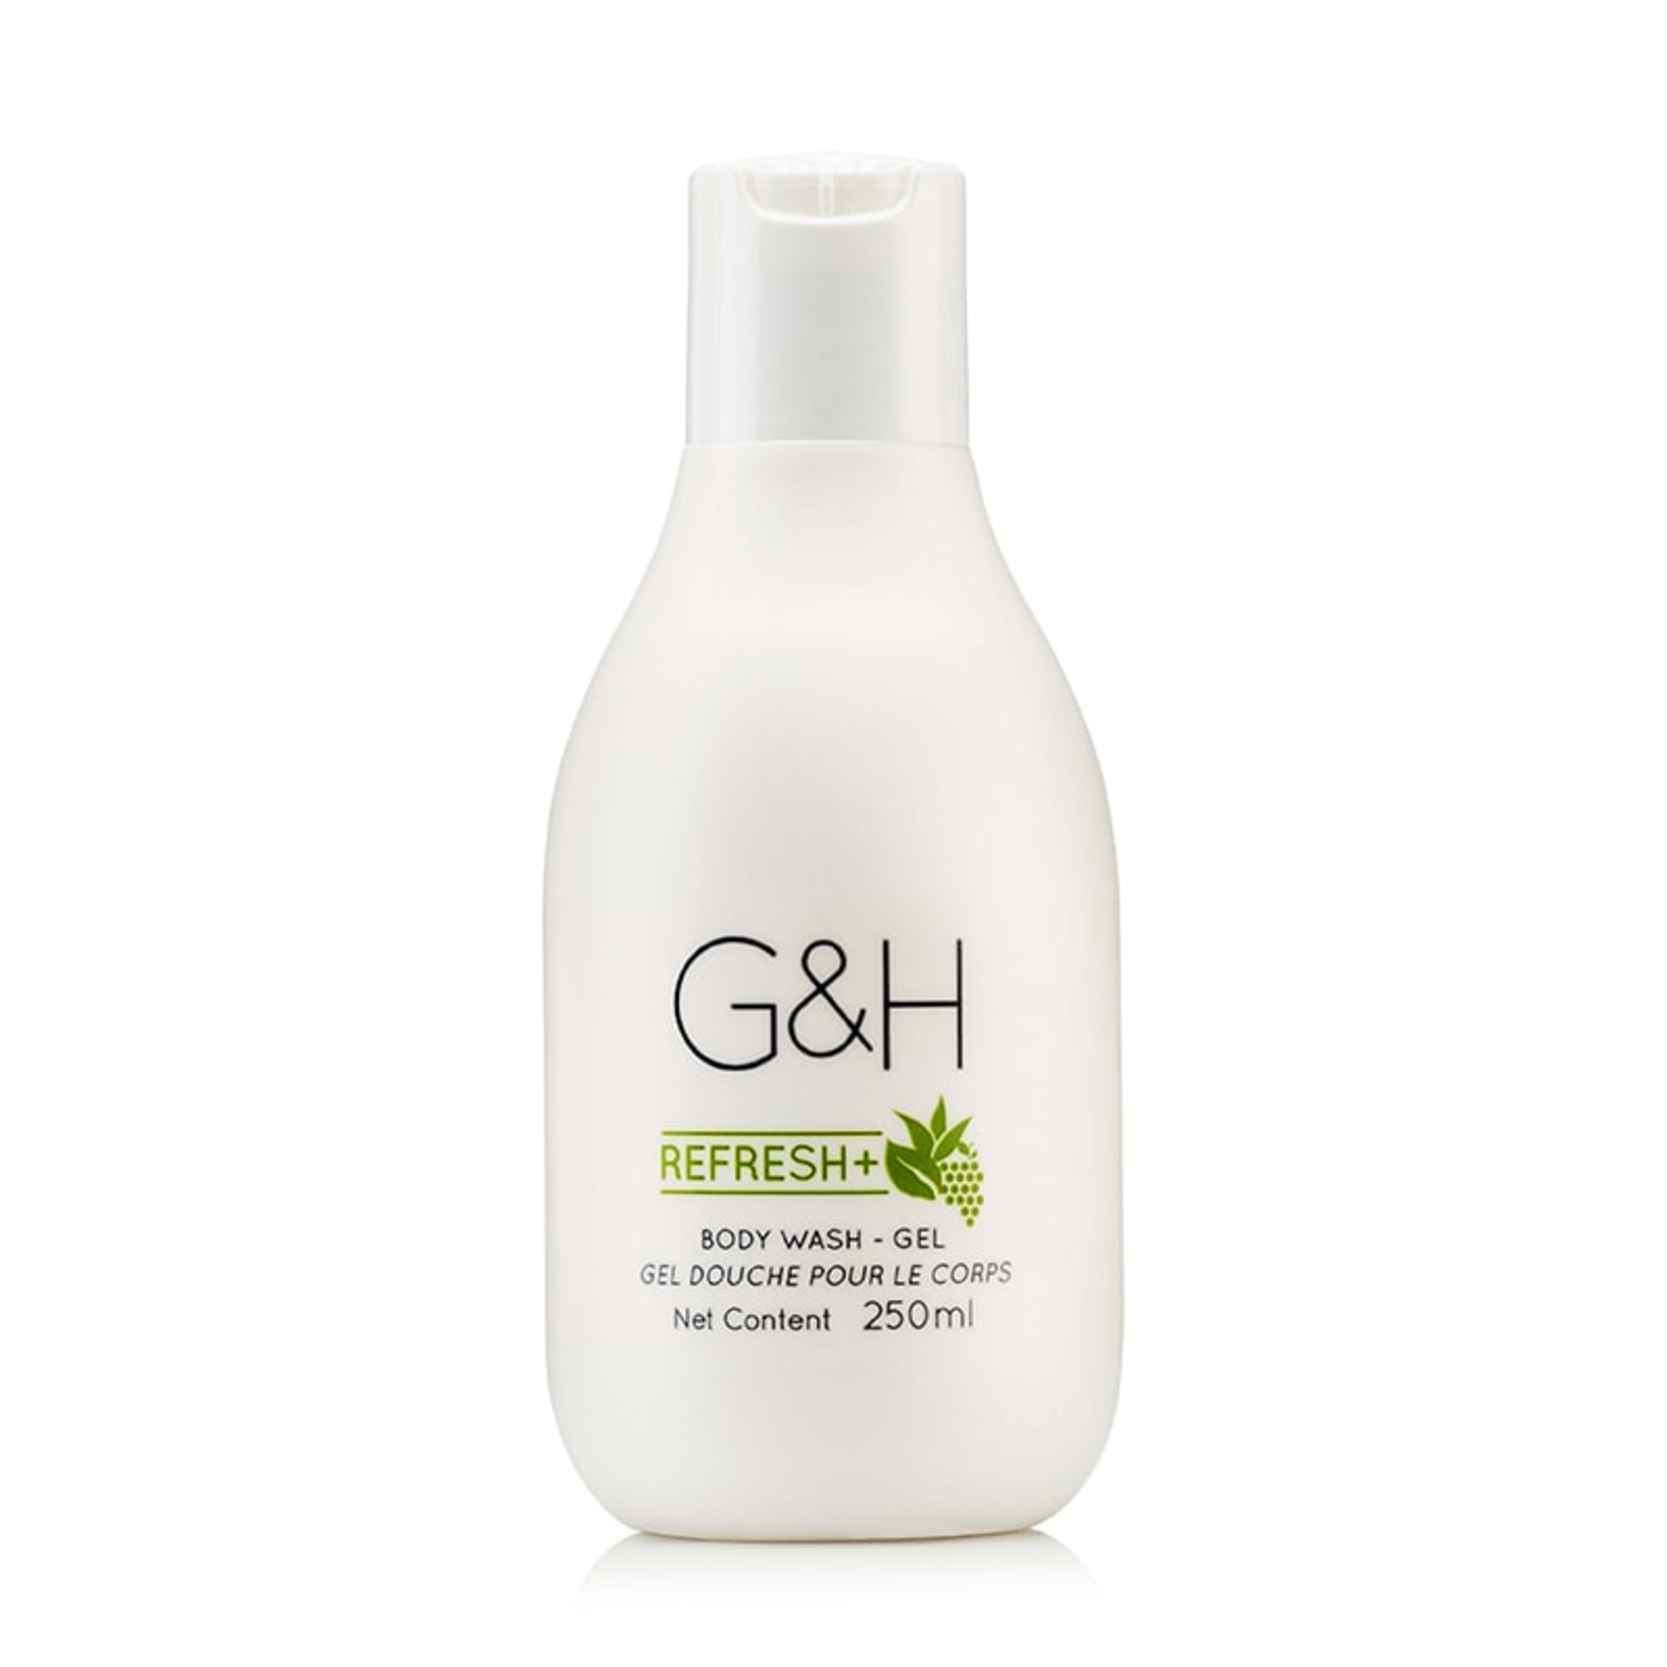 Thespian krans bestellen Clean Your Skin with G&H Refresh+ Body Wash - Gel 250 ml | Amway India